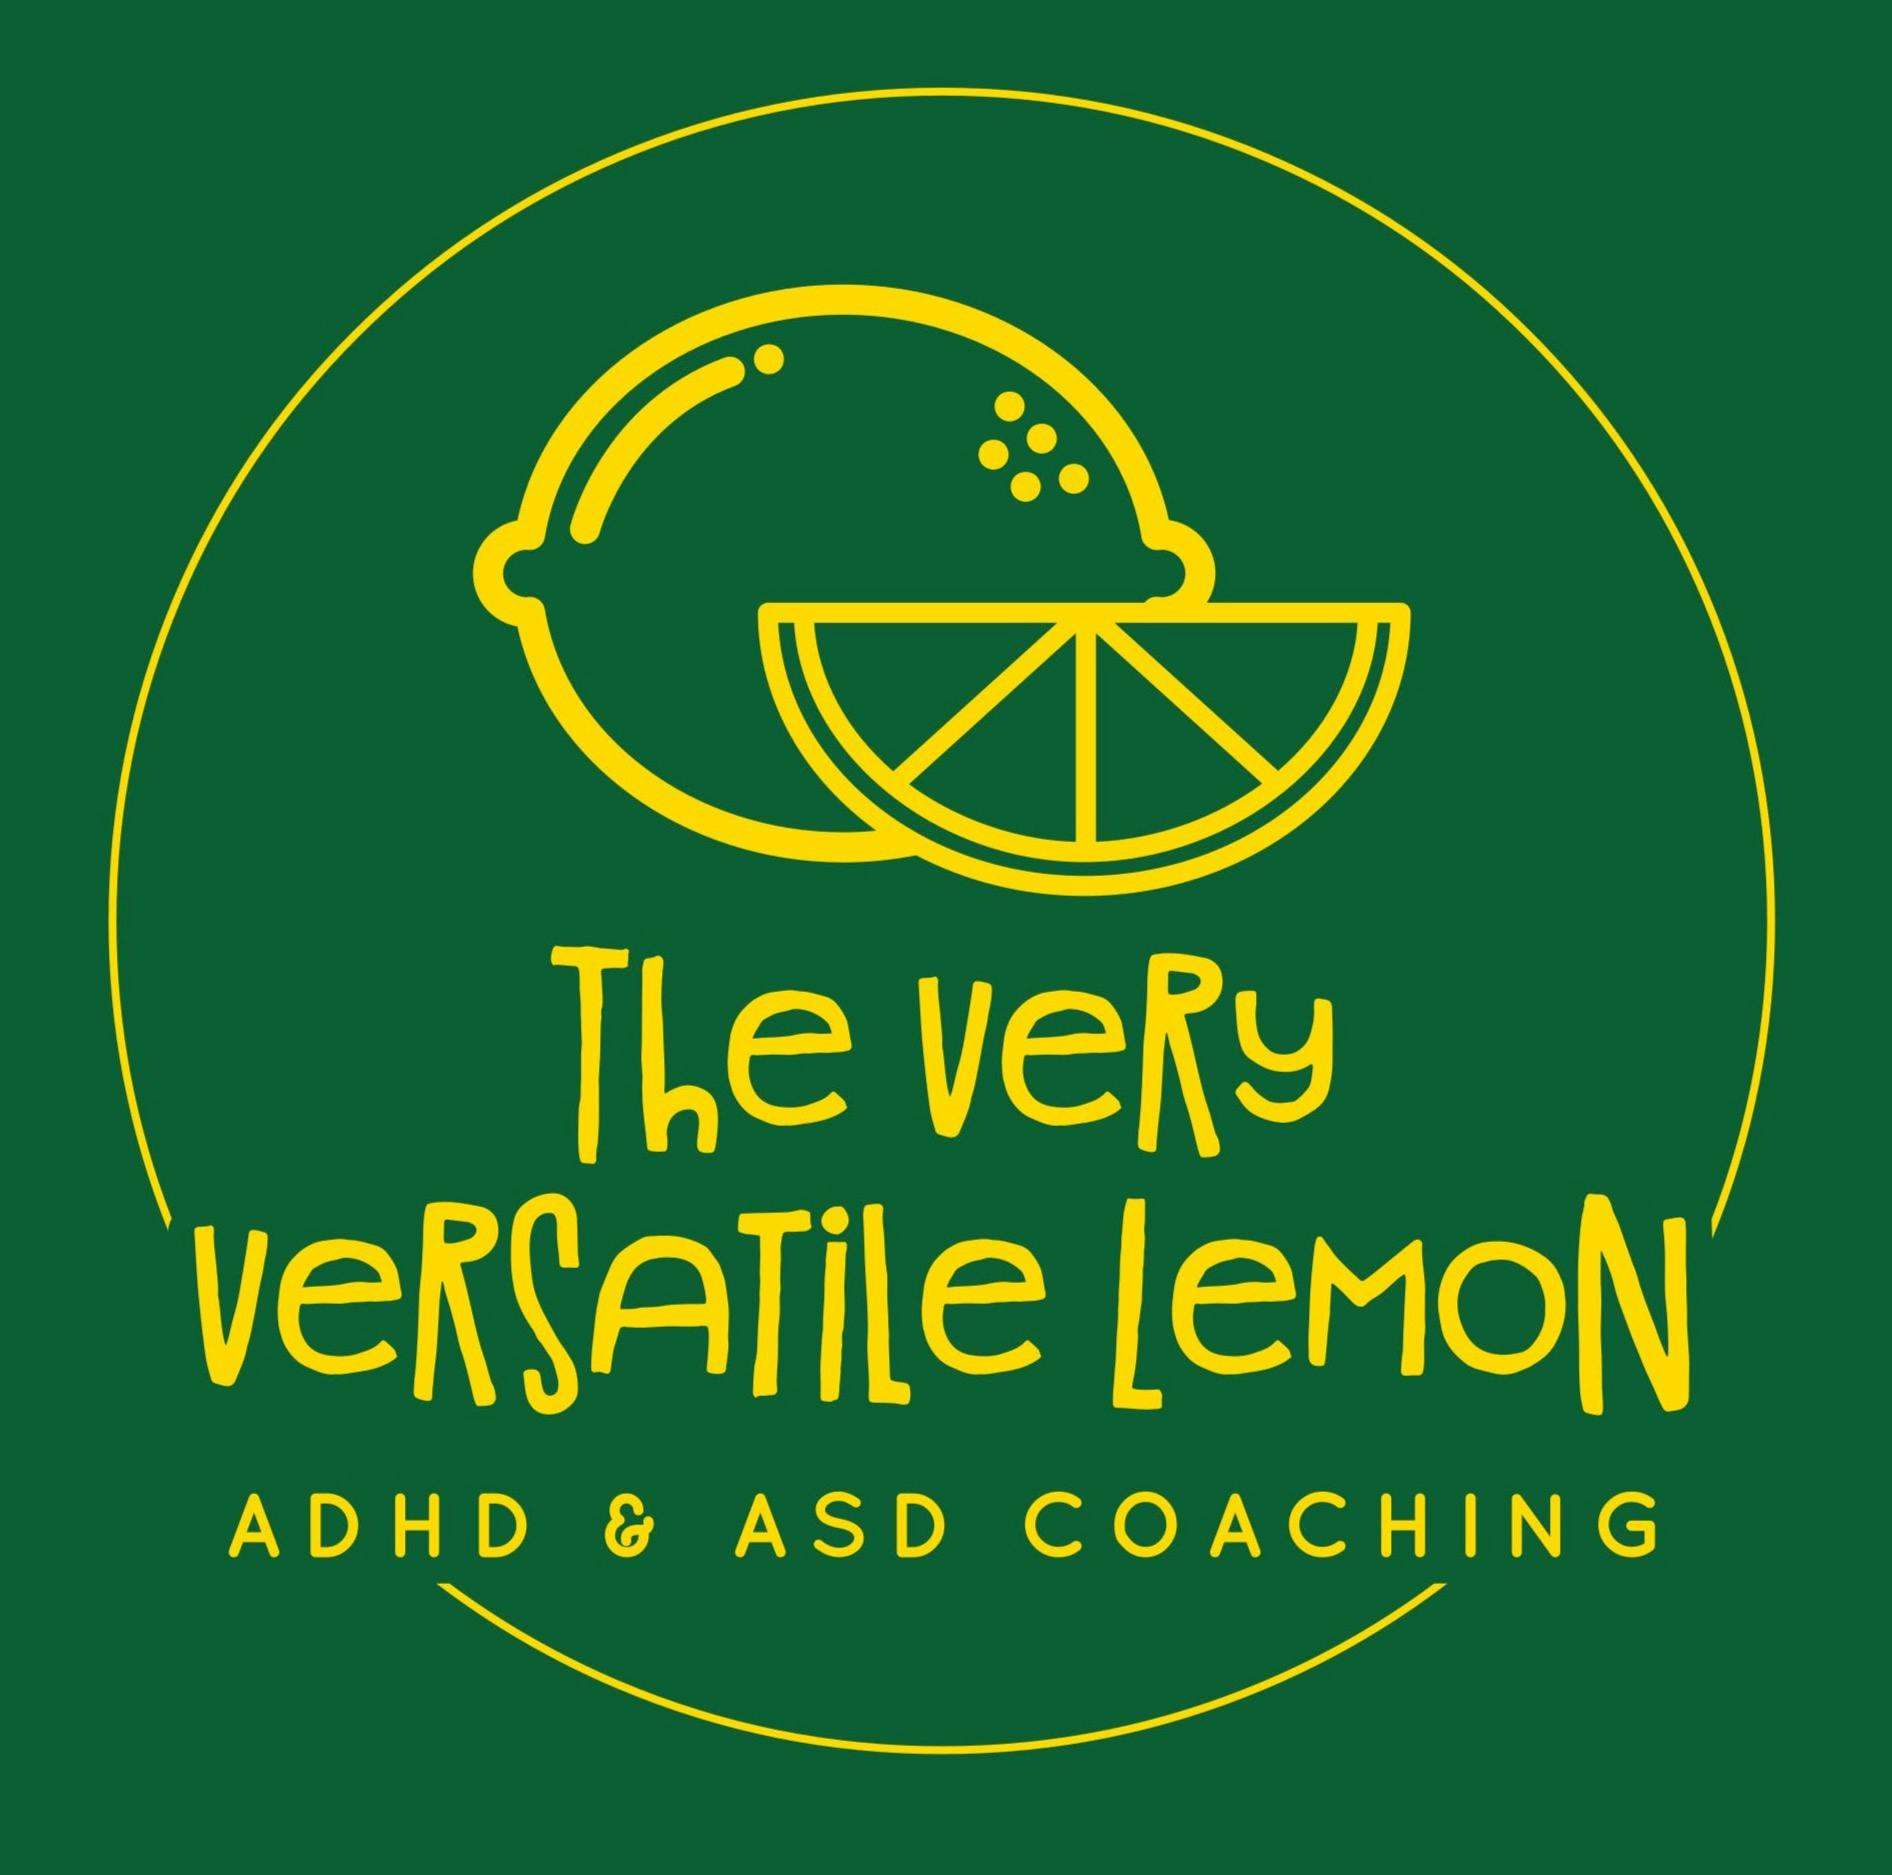 ADHD & ASD Coaching Melbourne